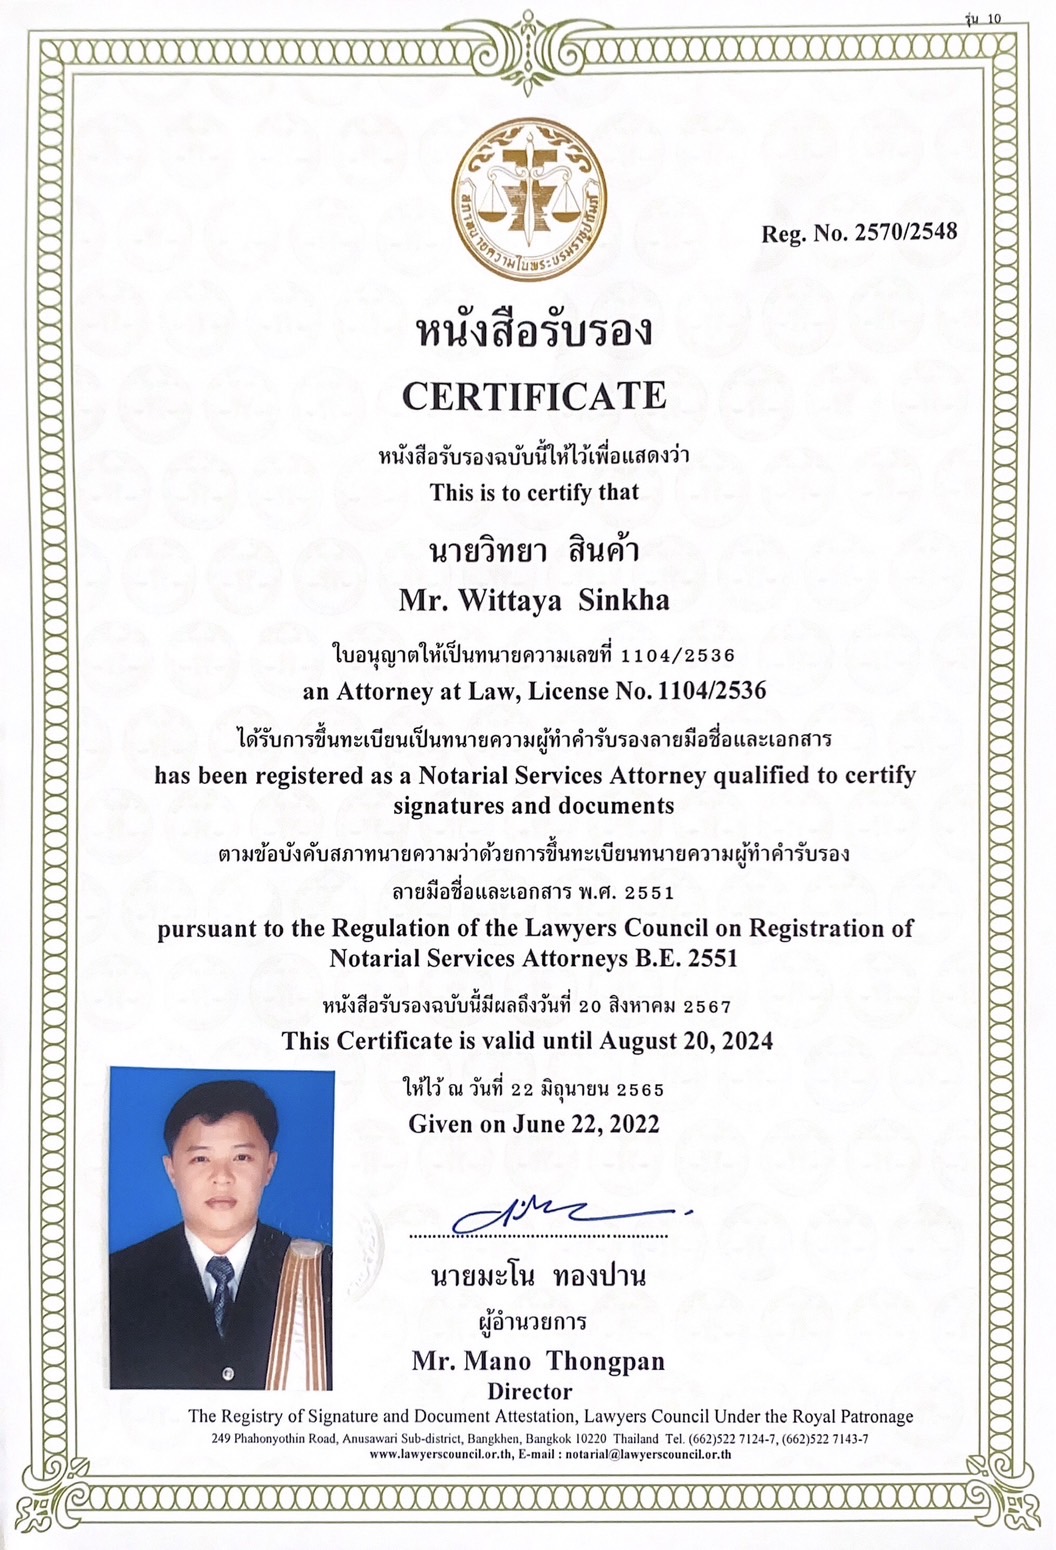 Notarial License Certificate